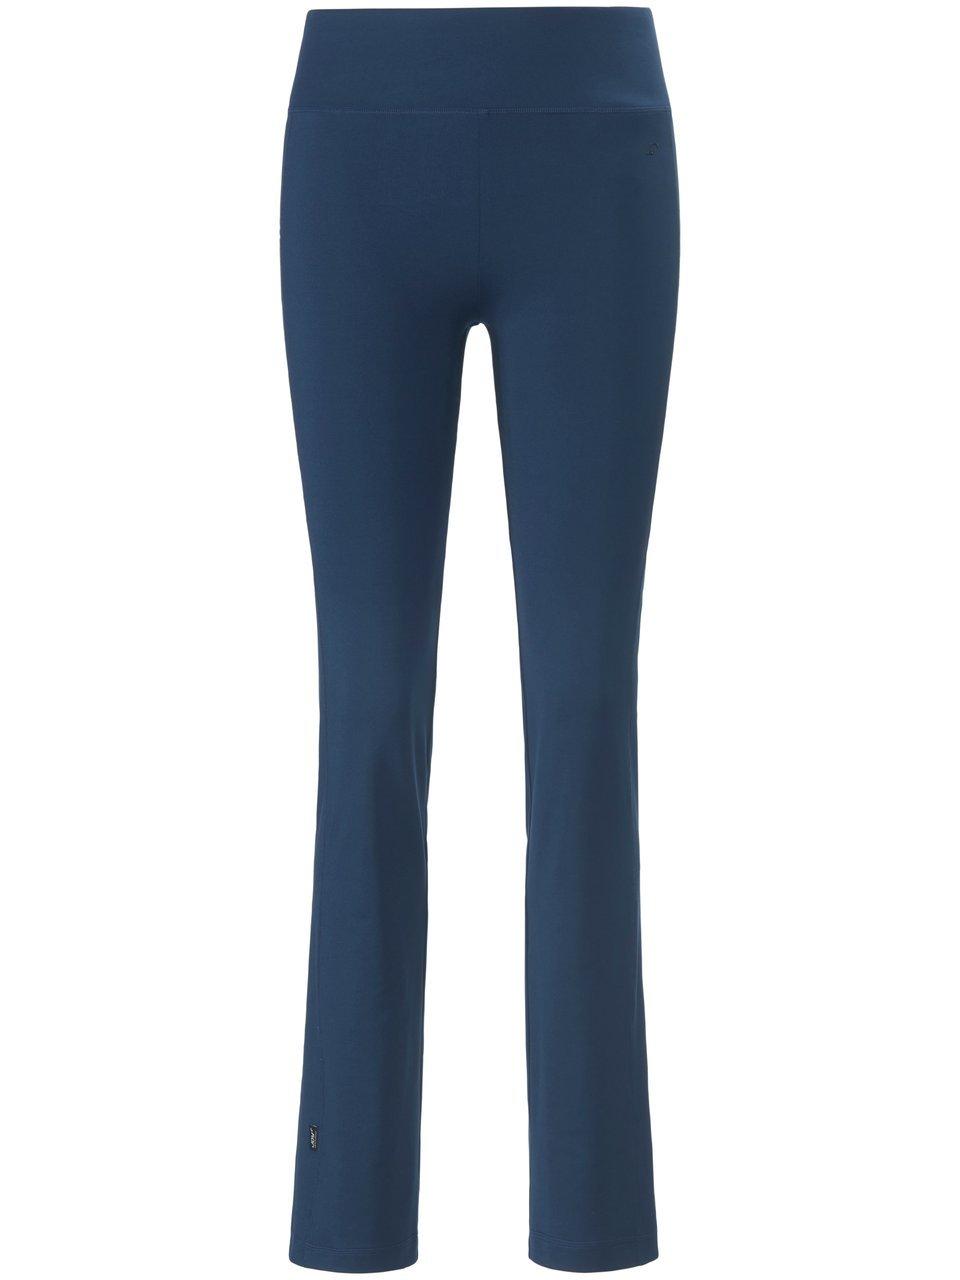 Lange broek BodyFit light model Marion Van JOY Sportswear blauw